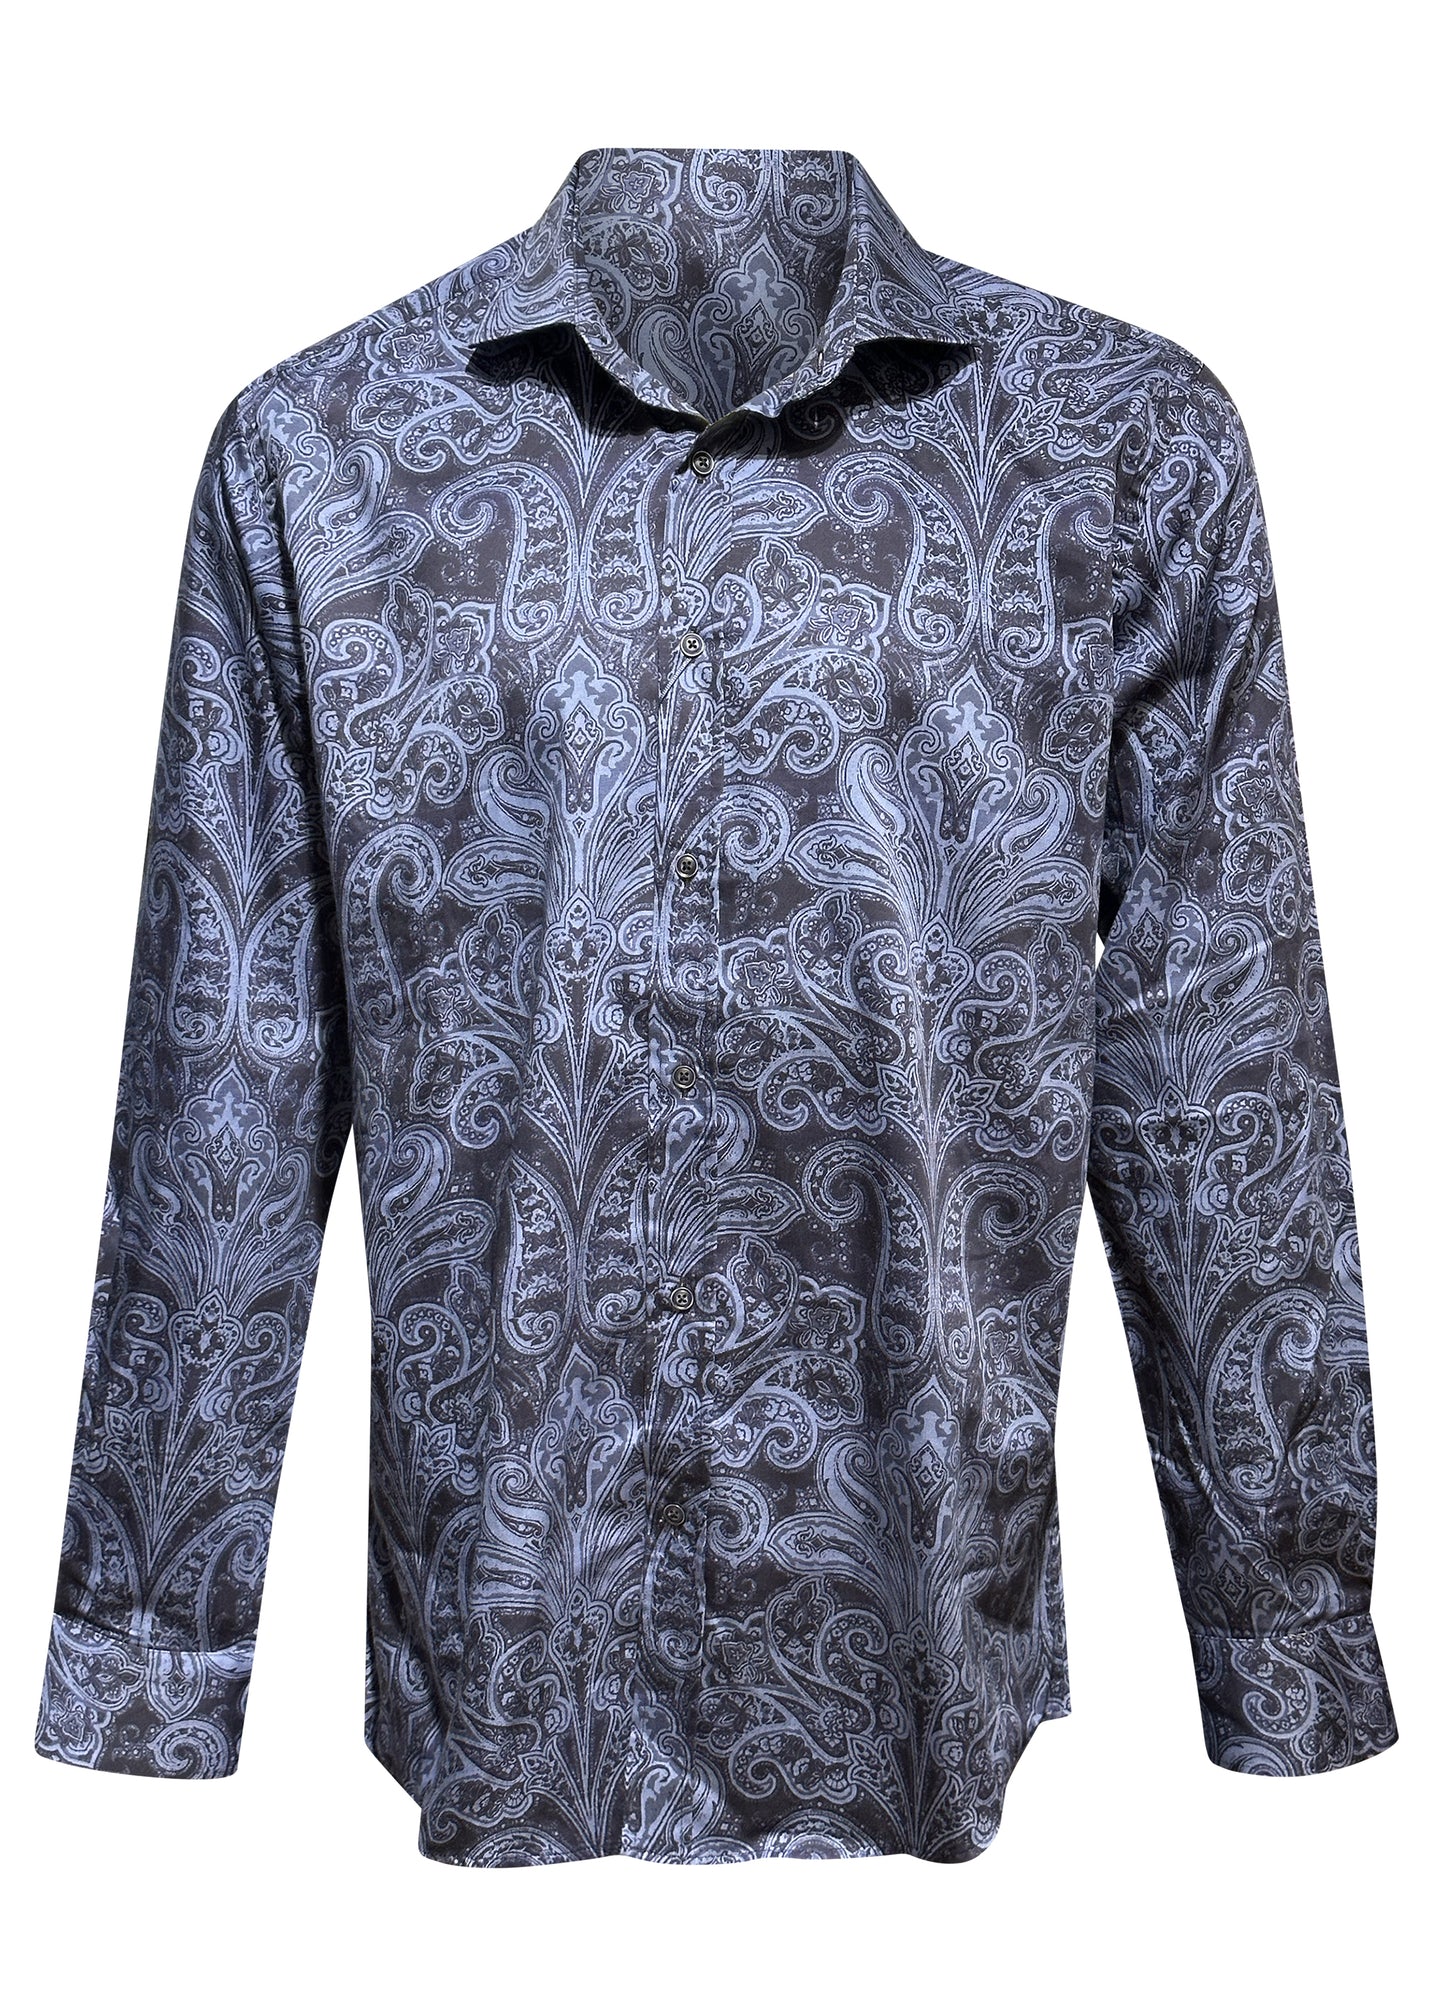 Guide London - Paisley Print Long Sleeves Shirt - 400243 - Blue